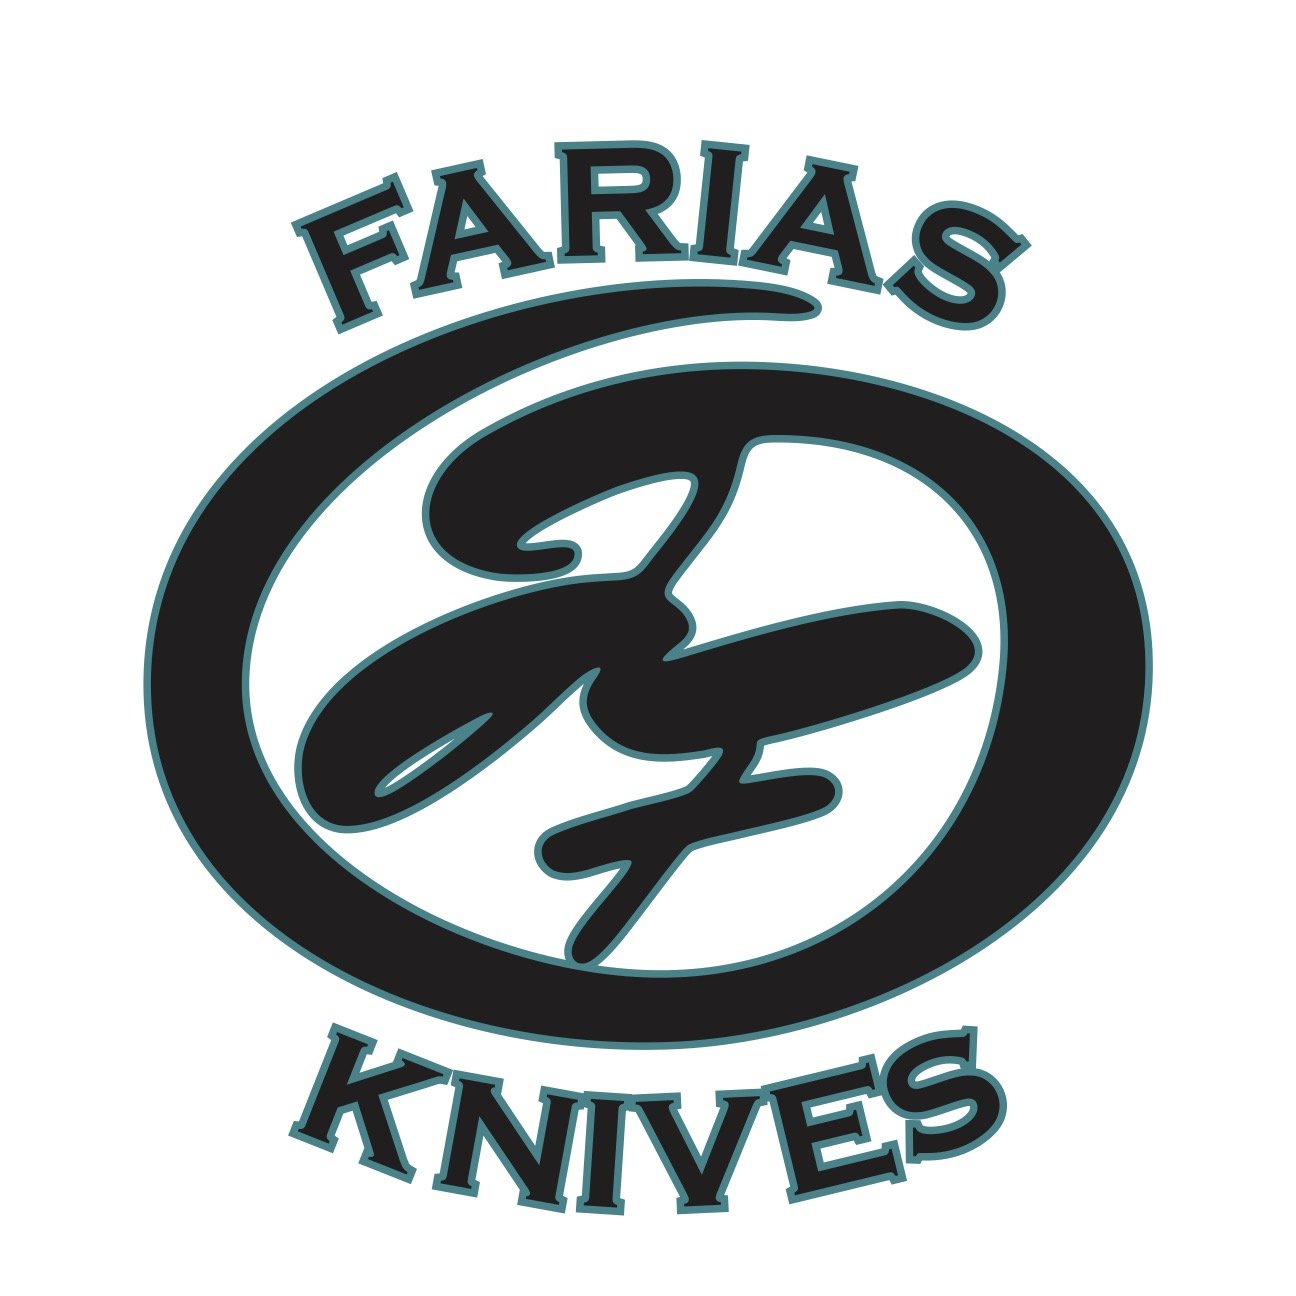 Farias Knives